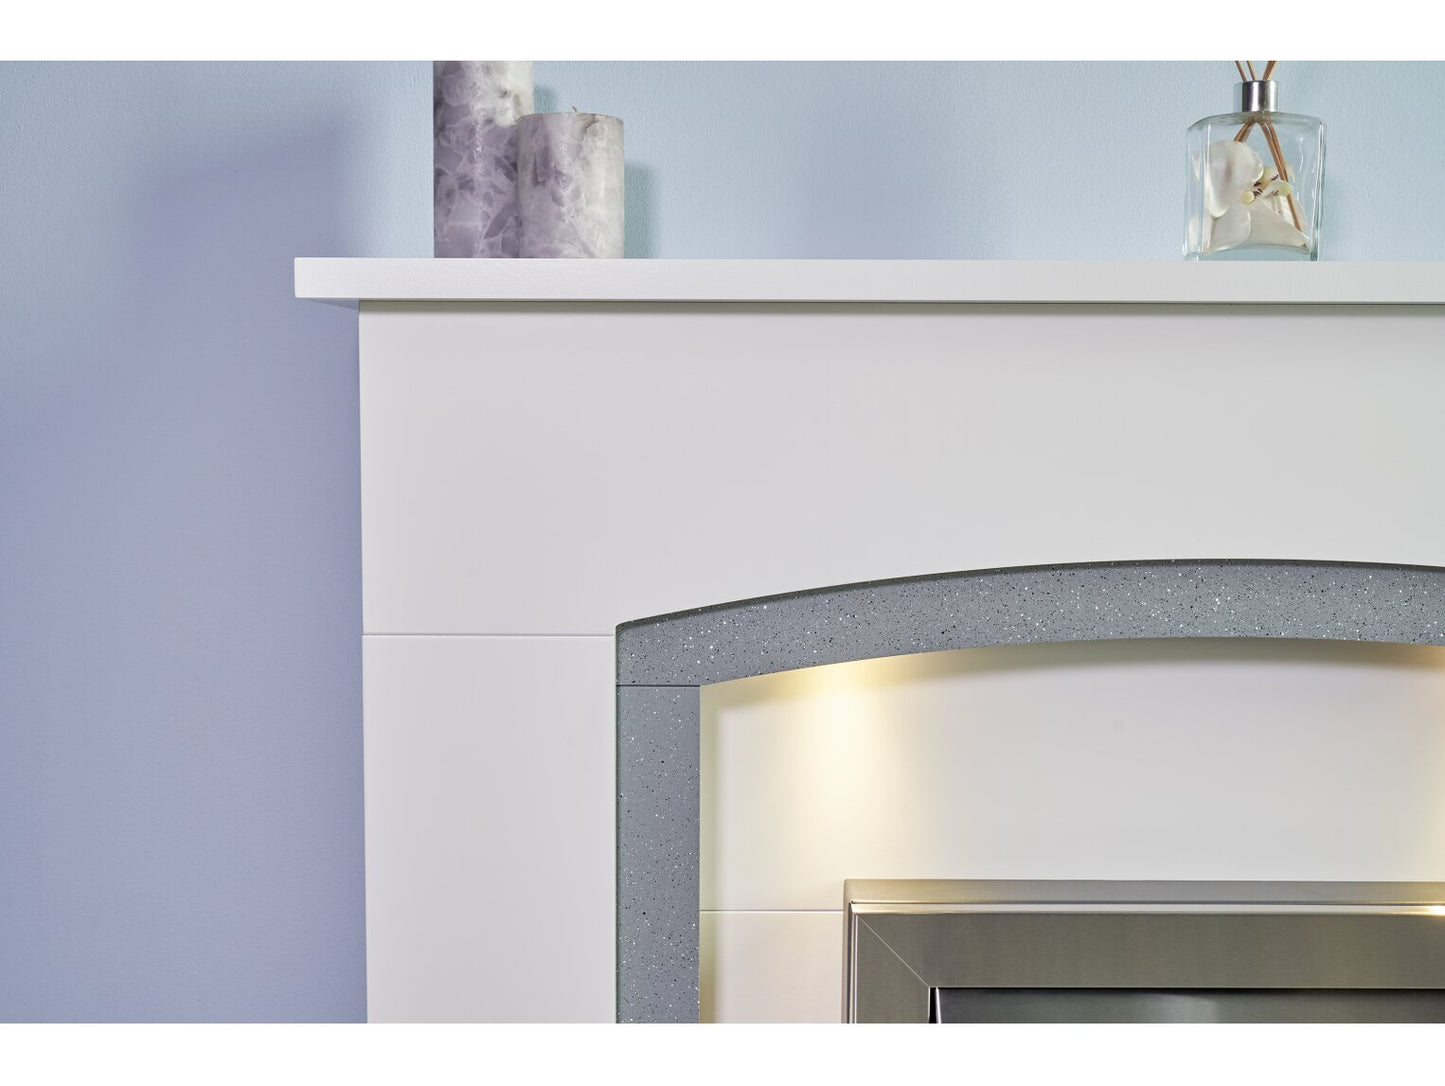 Adam Savanna Fireplace with Downlights, 48 Inch 22628 Pure White & Grey